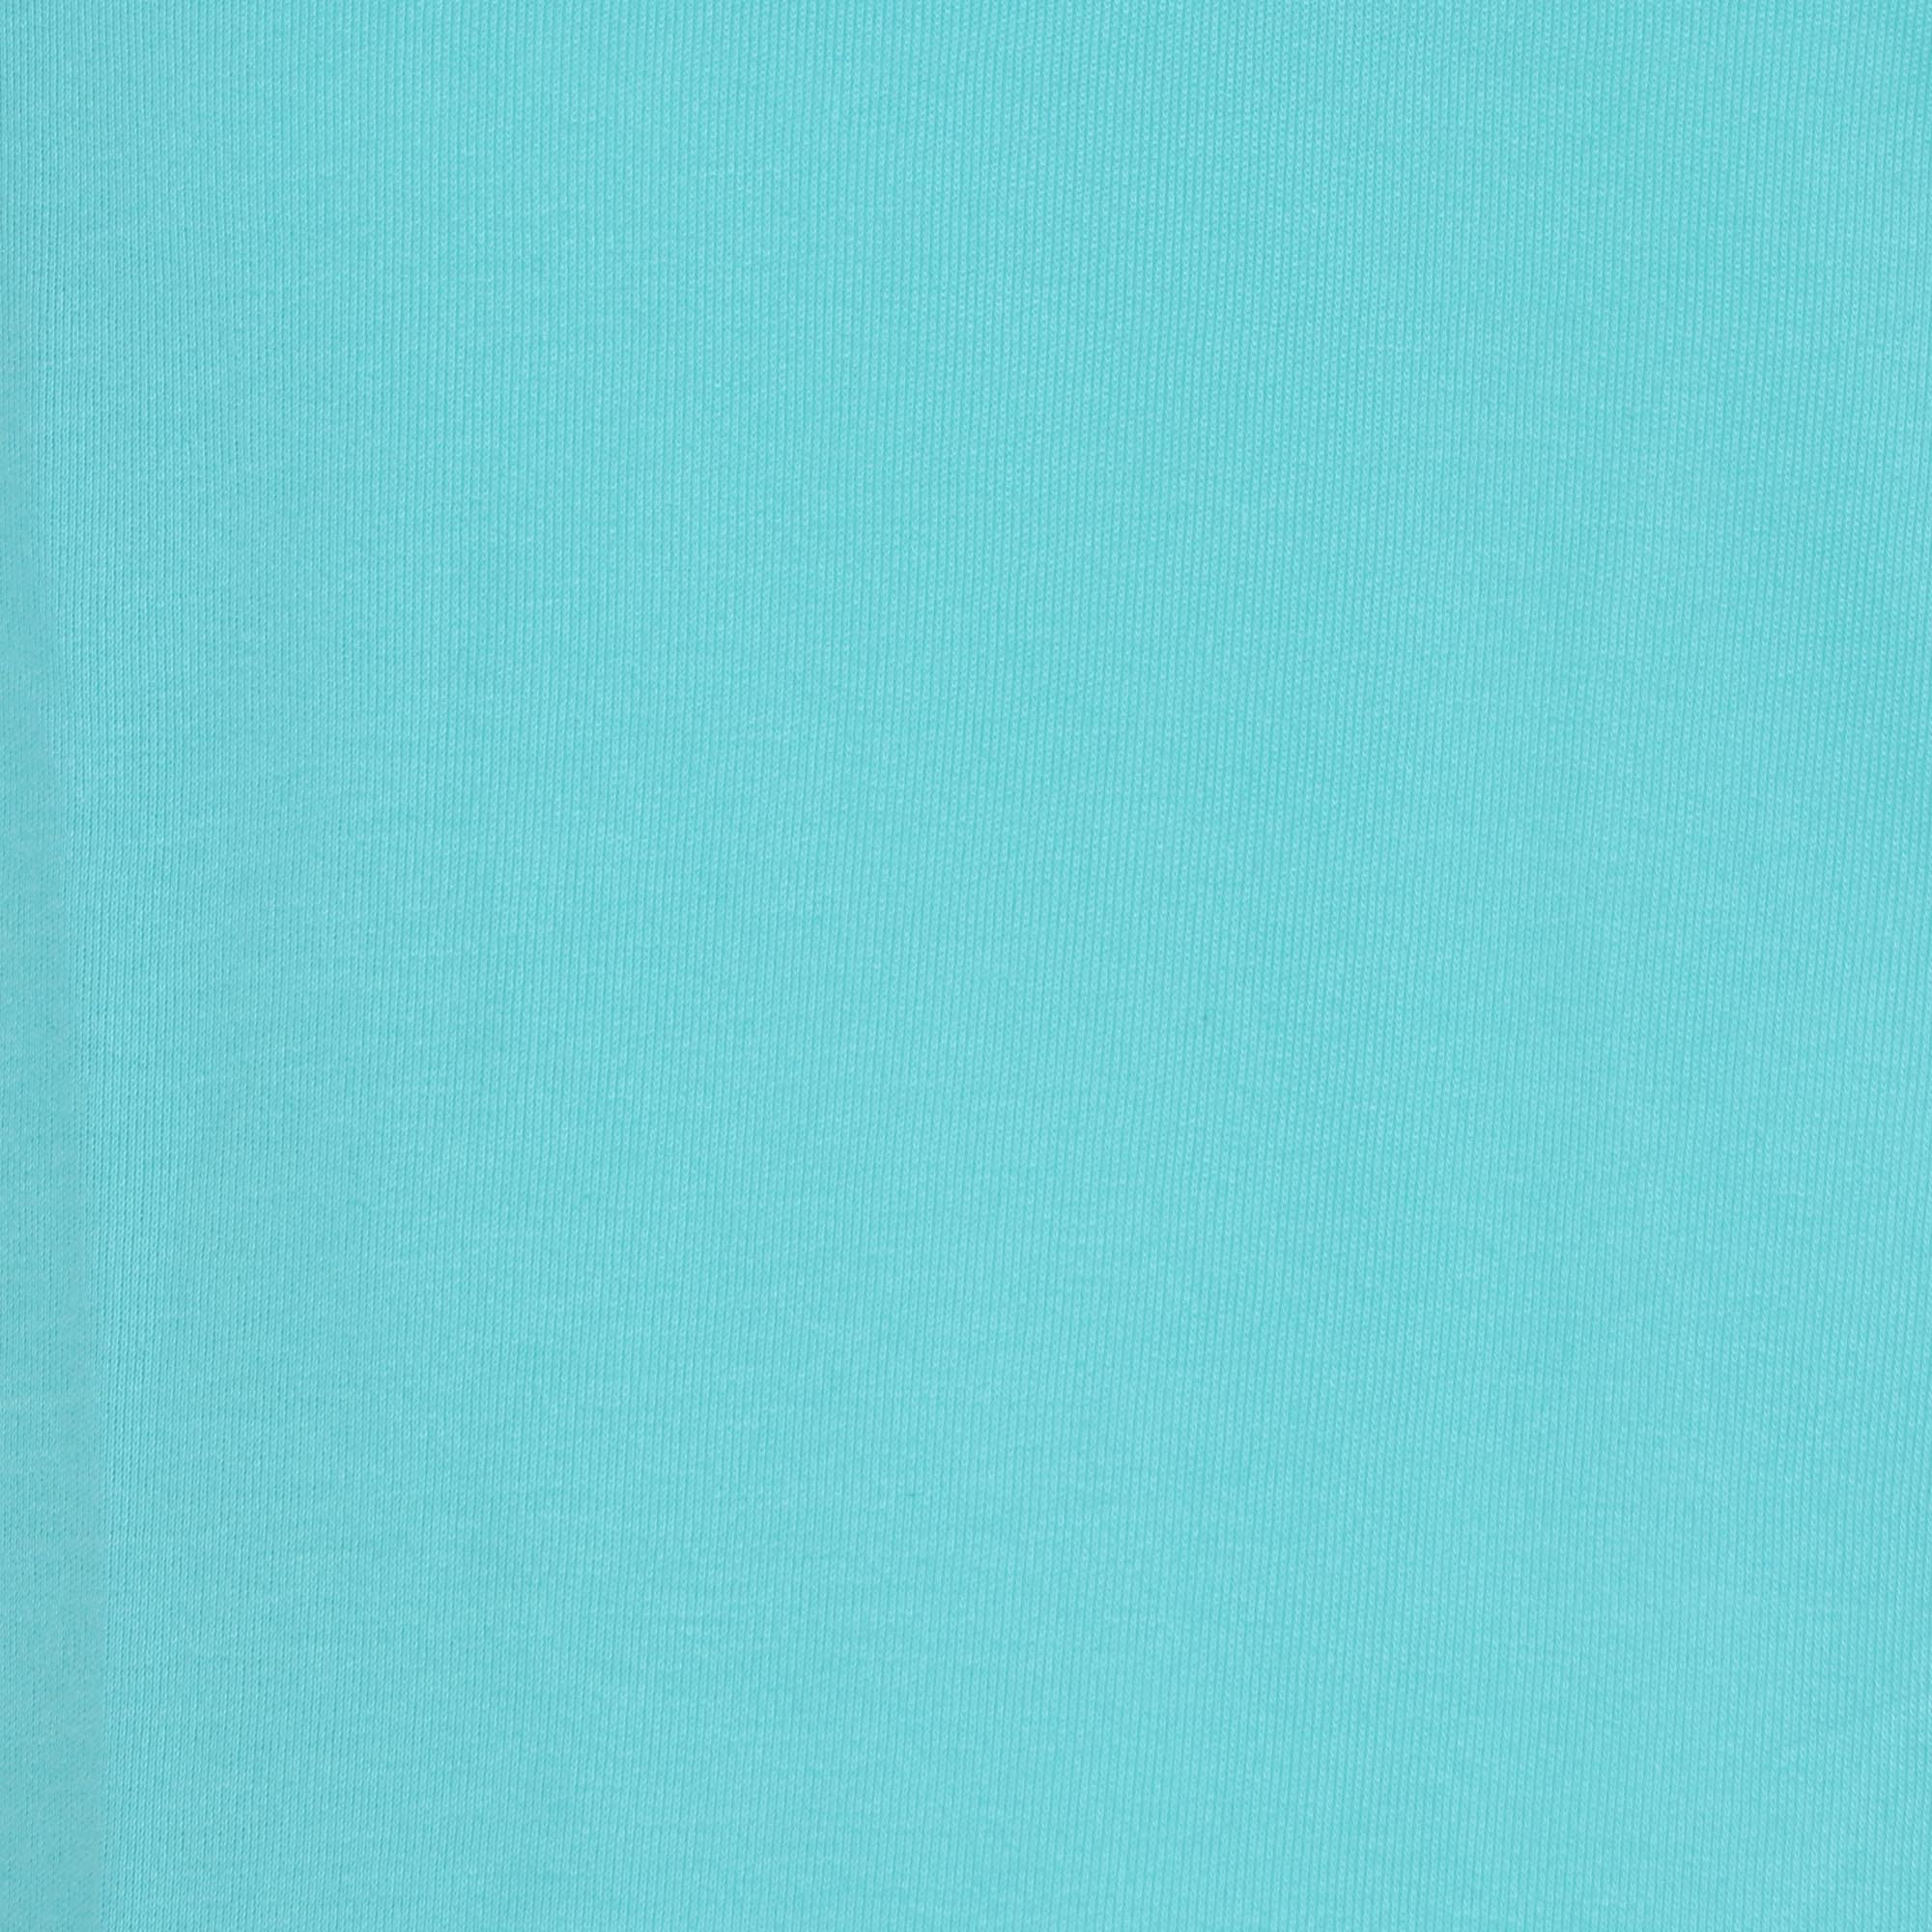 Мужская футболка-поло Diva Teks лазурная (DTD-12), цвет лазурный, размер 44-46 - фото 6